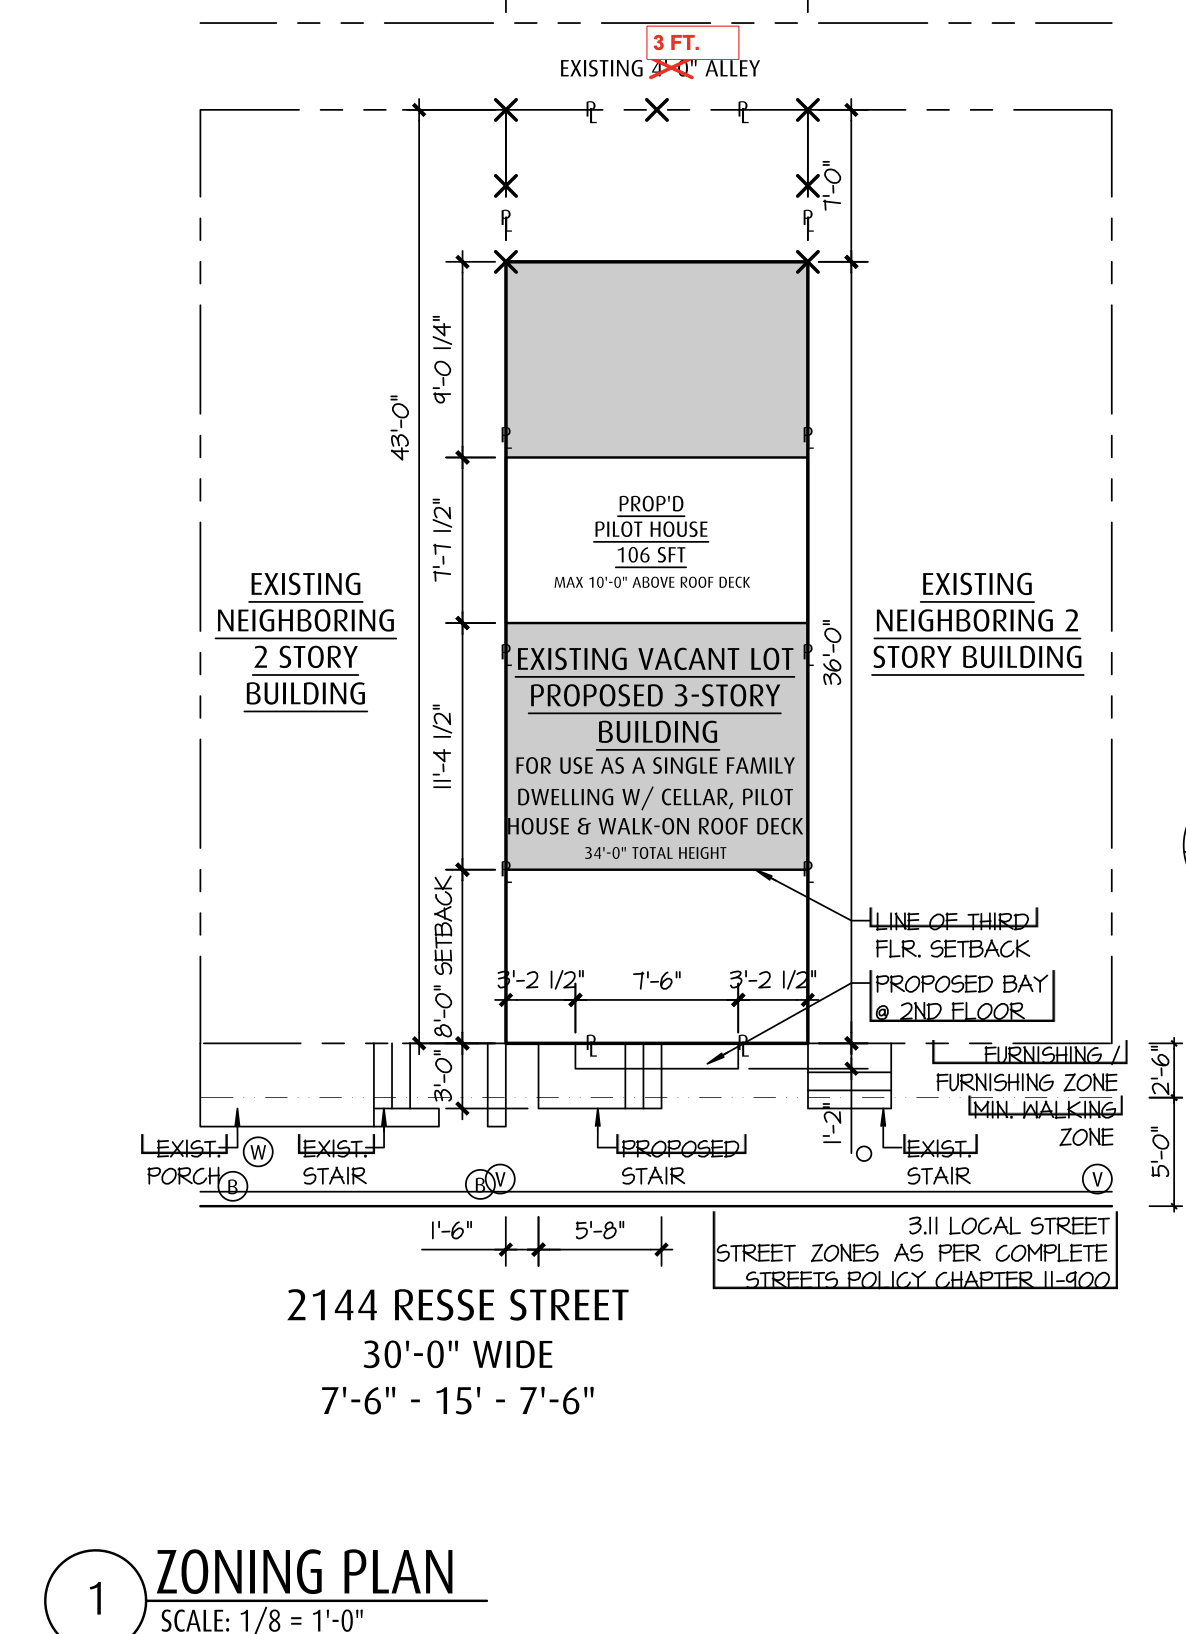 2144 North Reese Street Site Plan